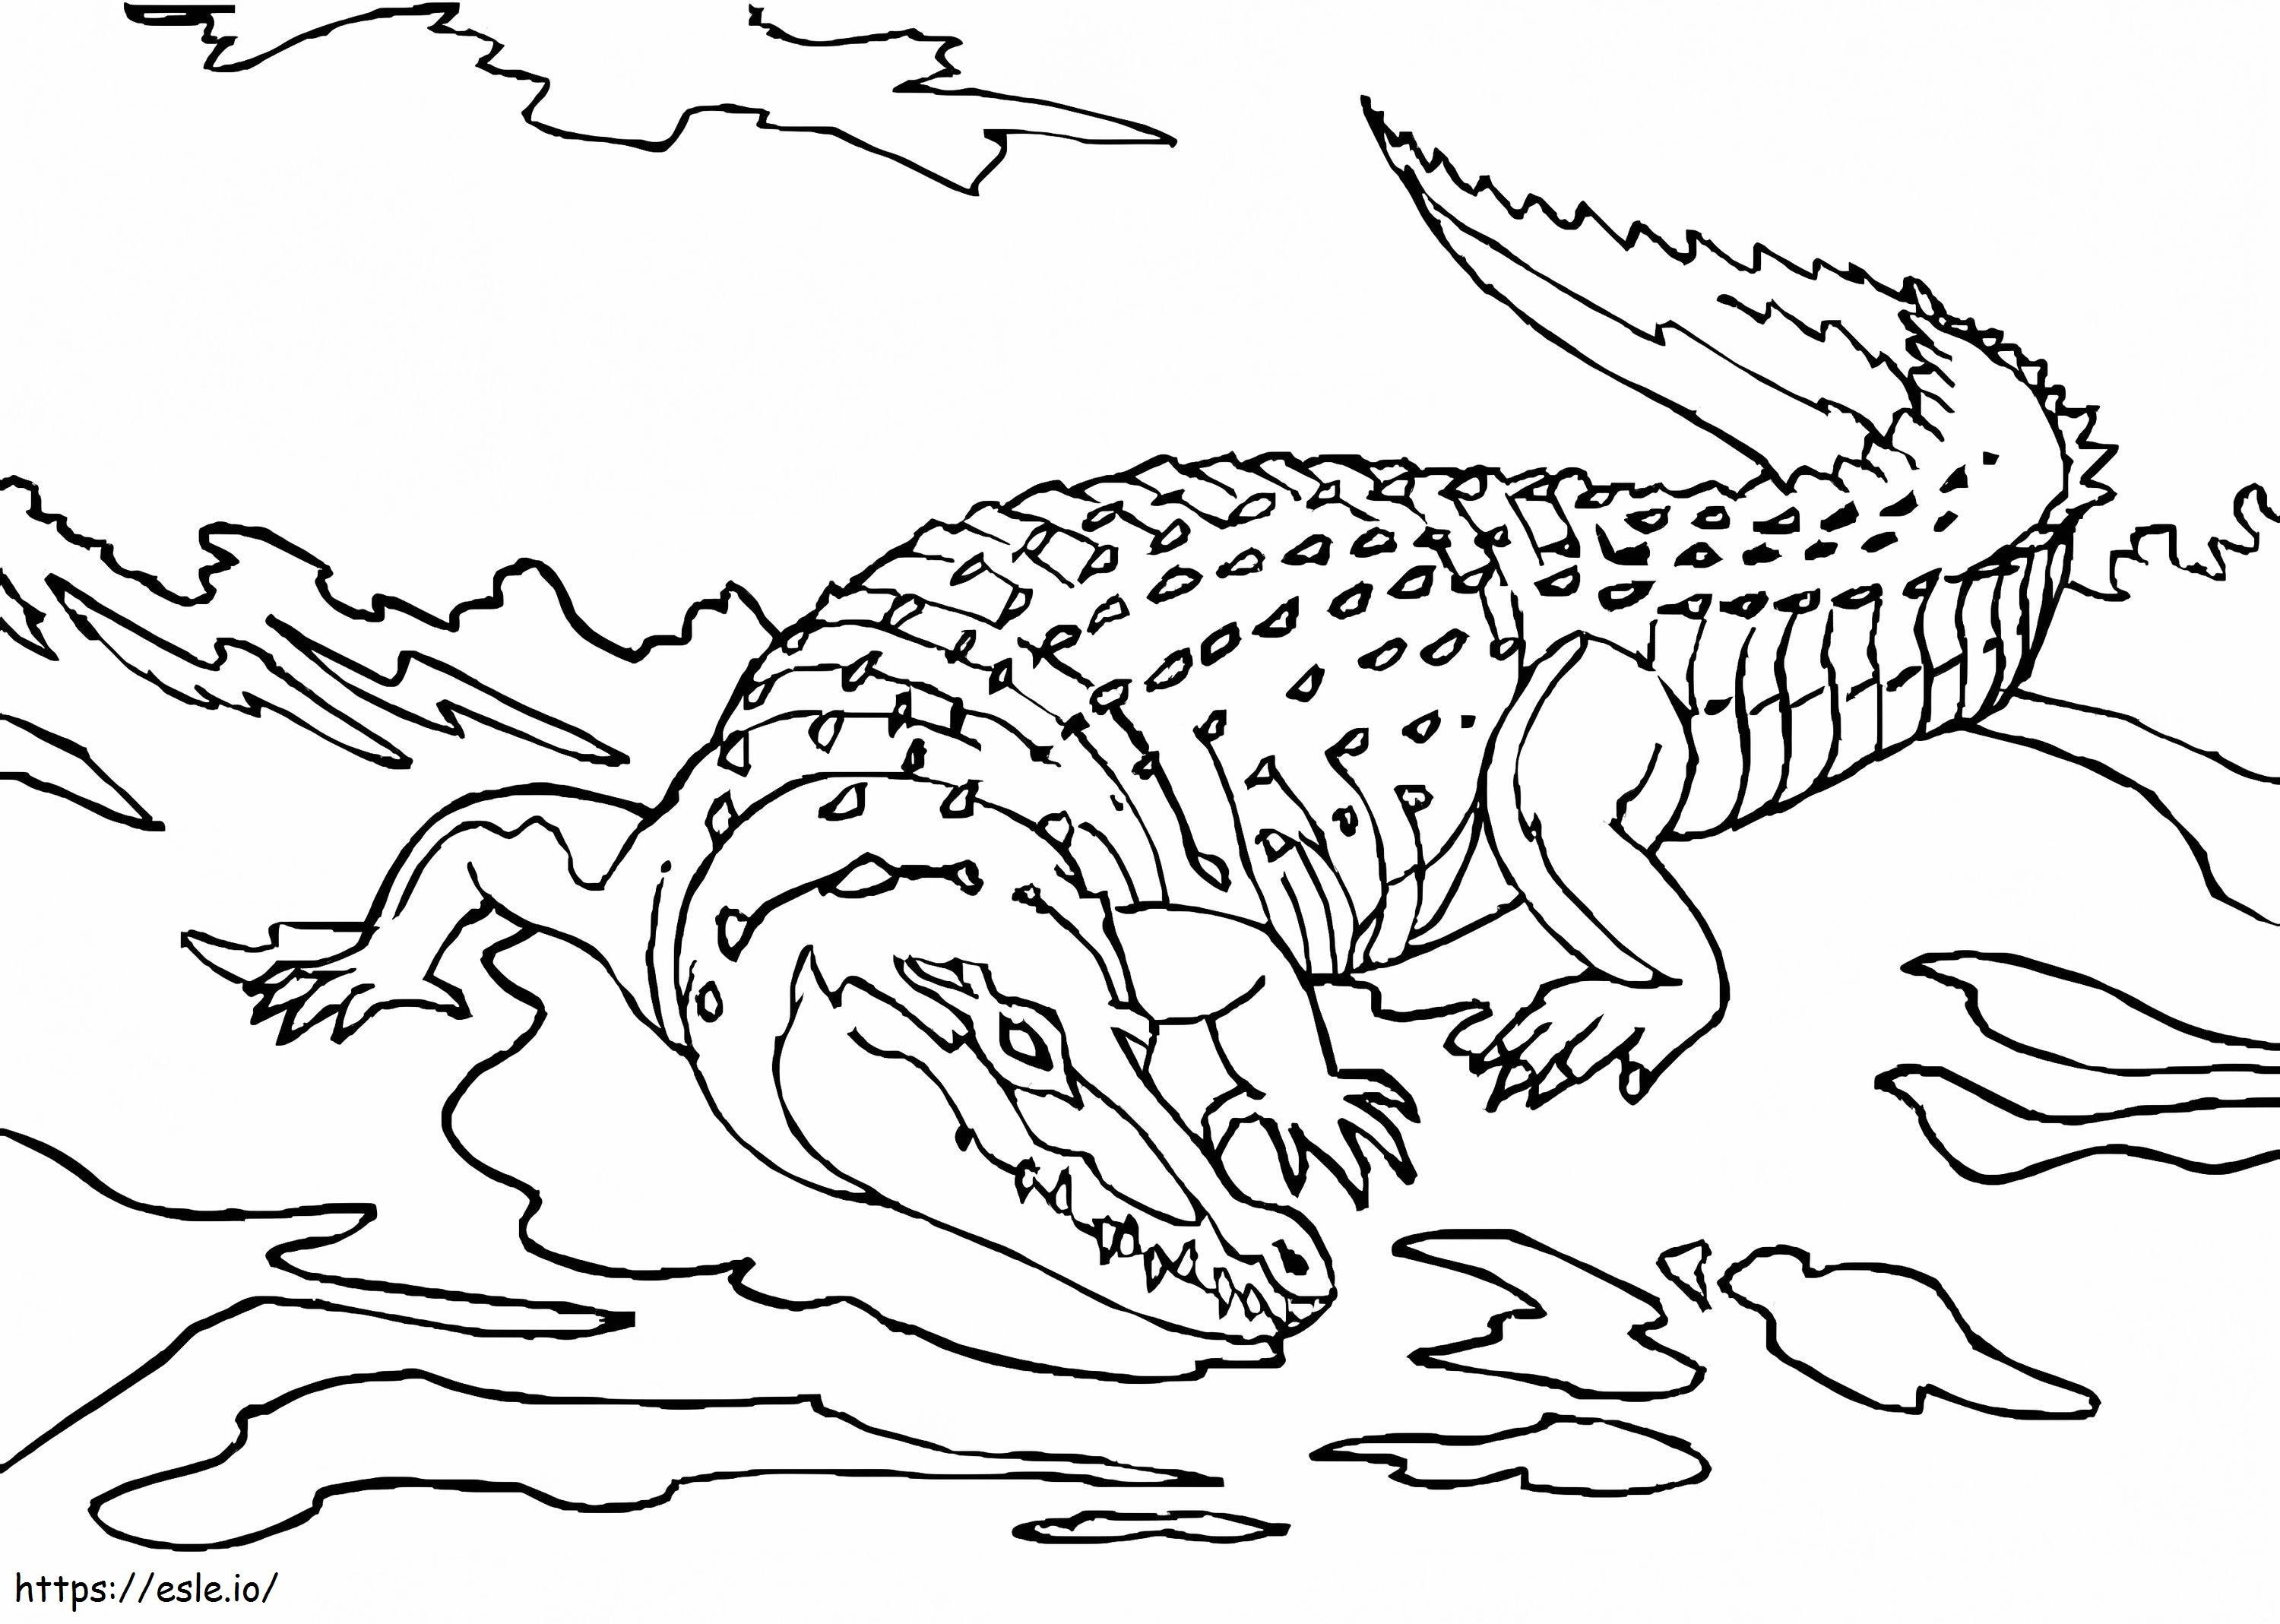 Crocodil de imprimat de colorat